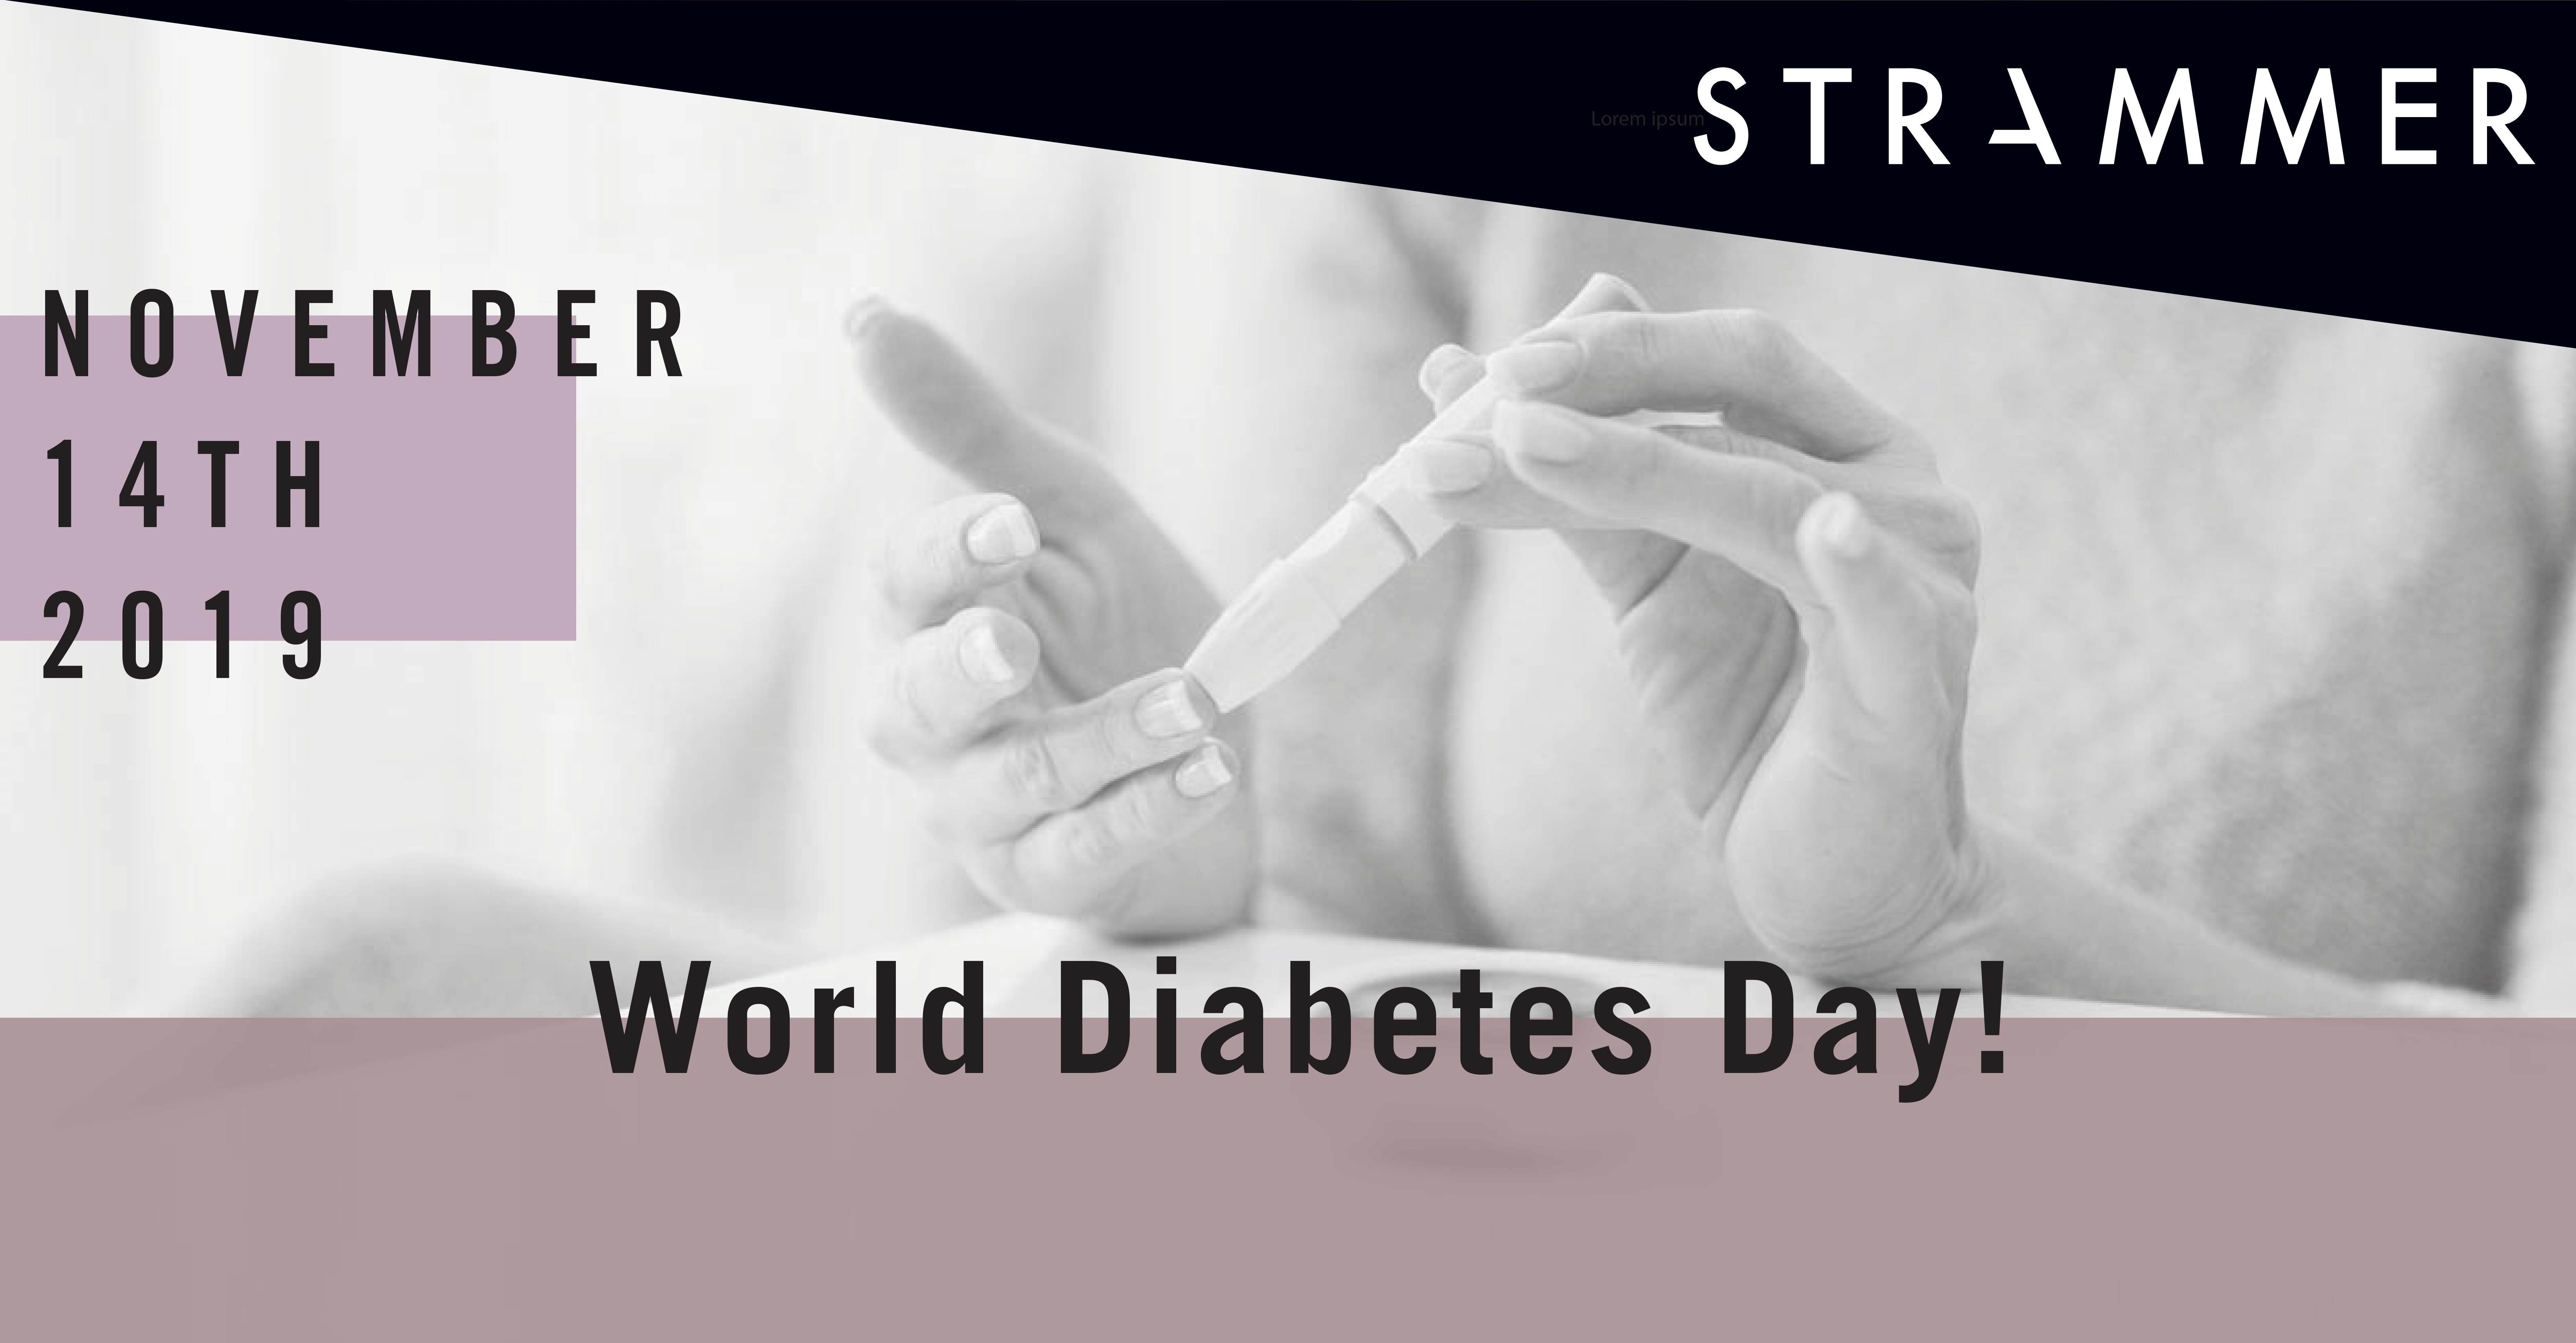 World Diabetes Day: 14th of November